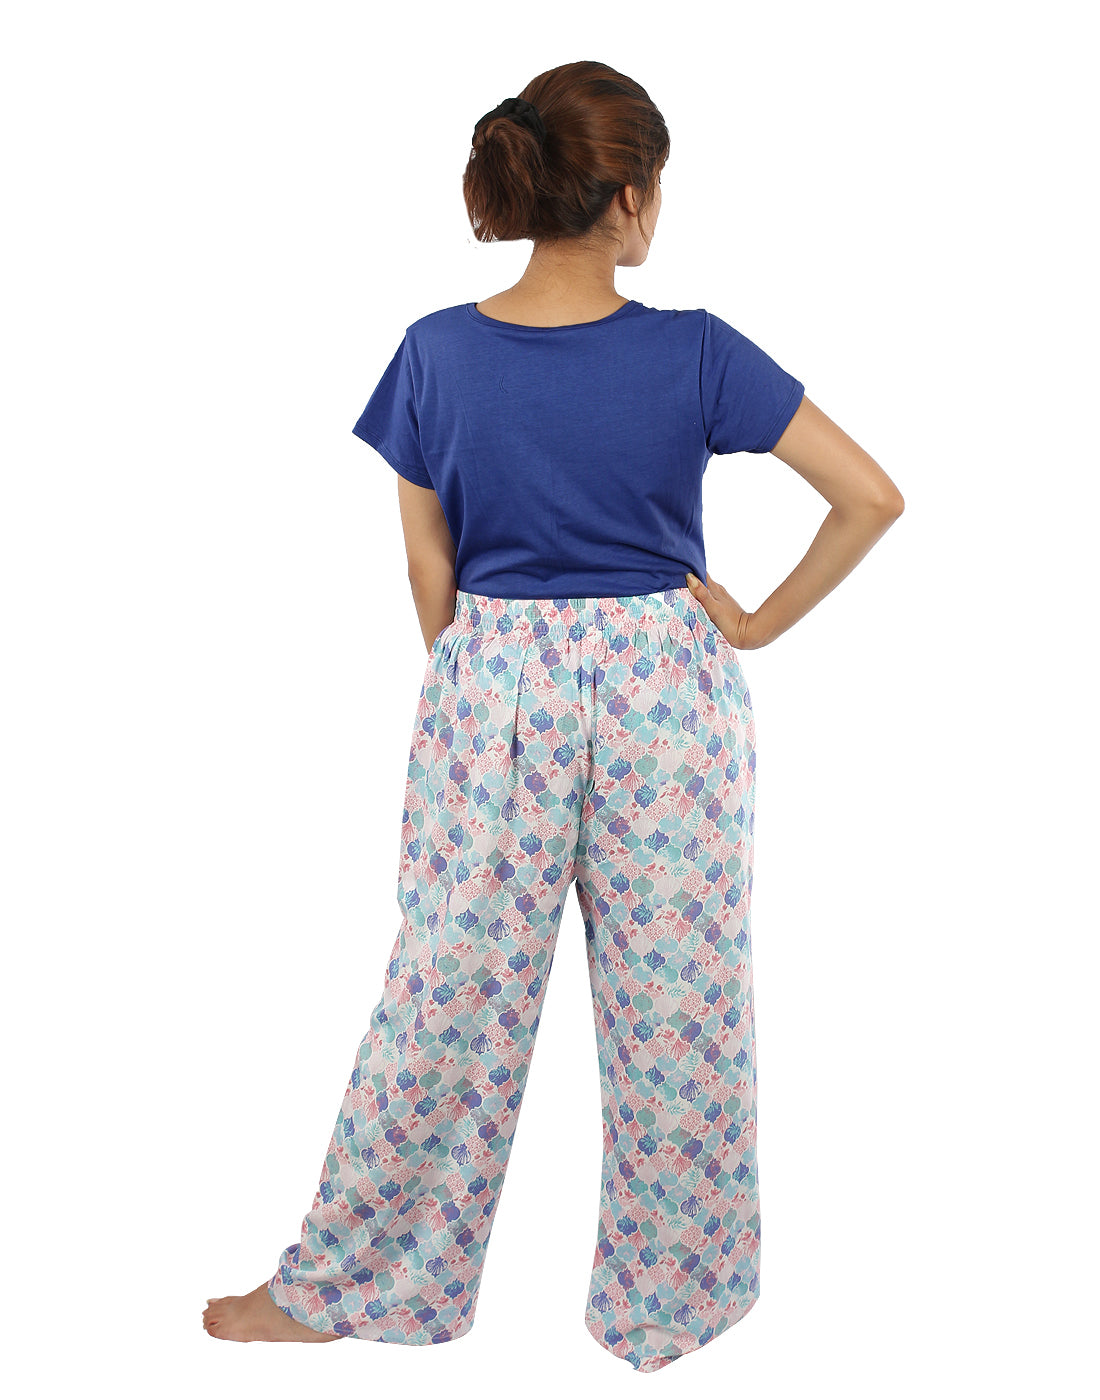 Pyjama Set for Women-Shell Palazzo